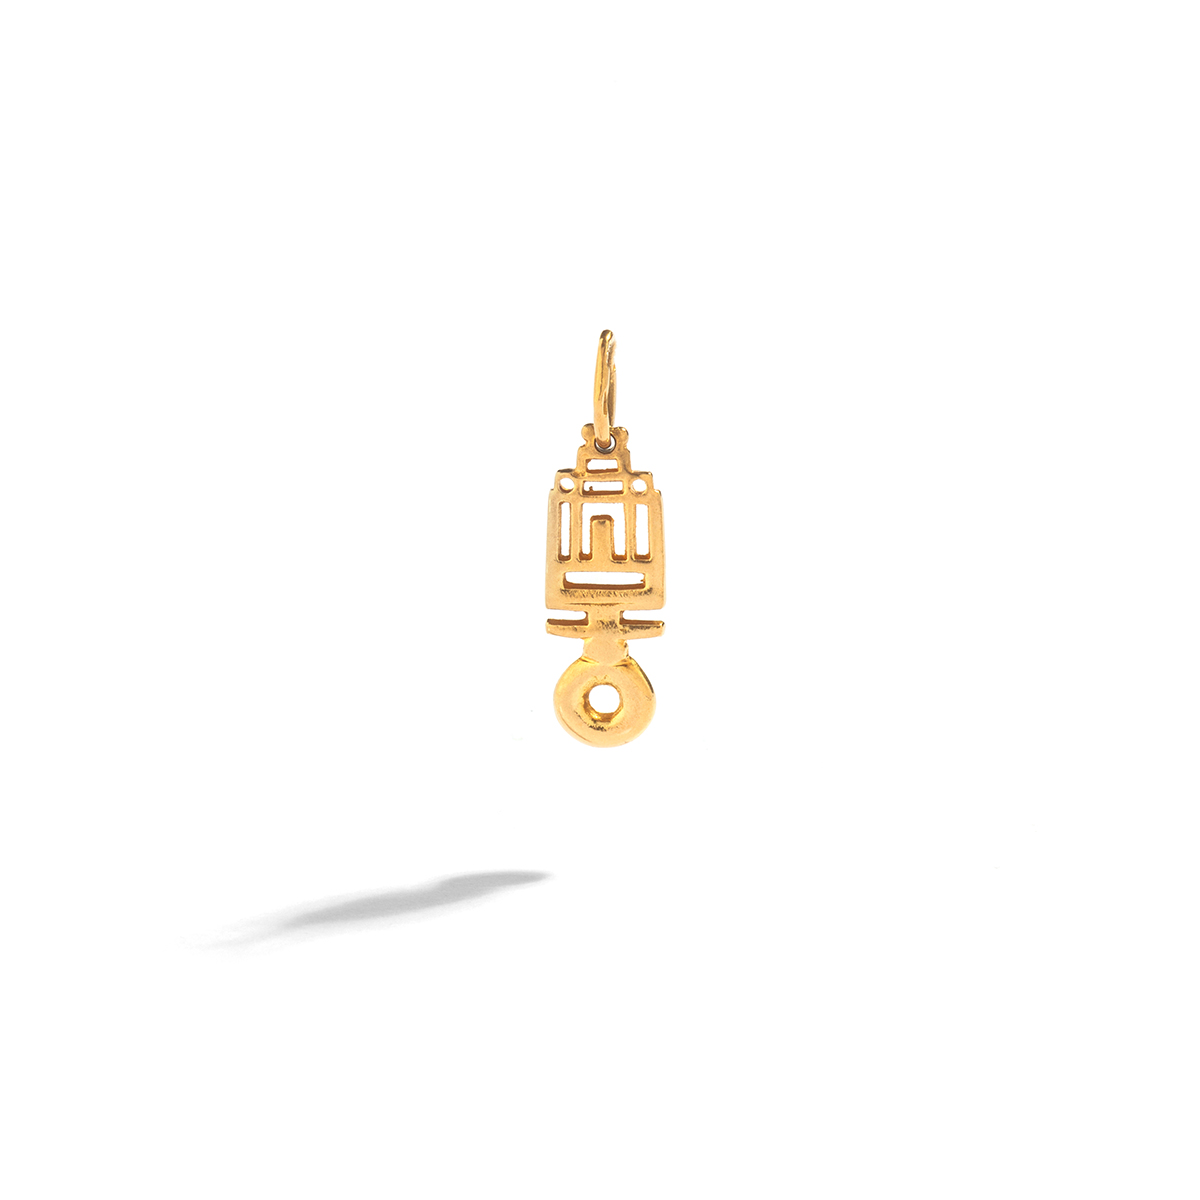 Egyptian hieroglyphic gold pendant